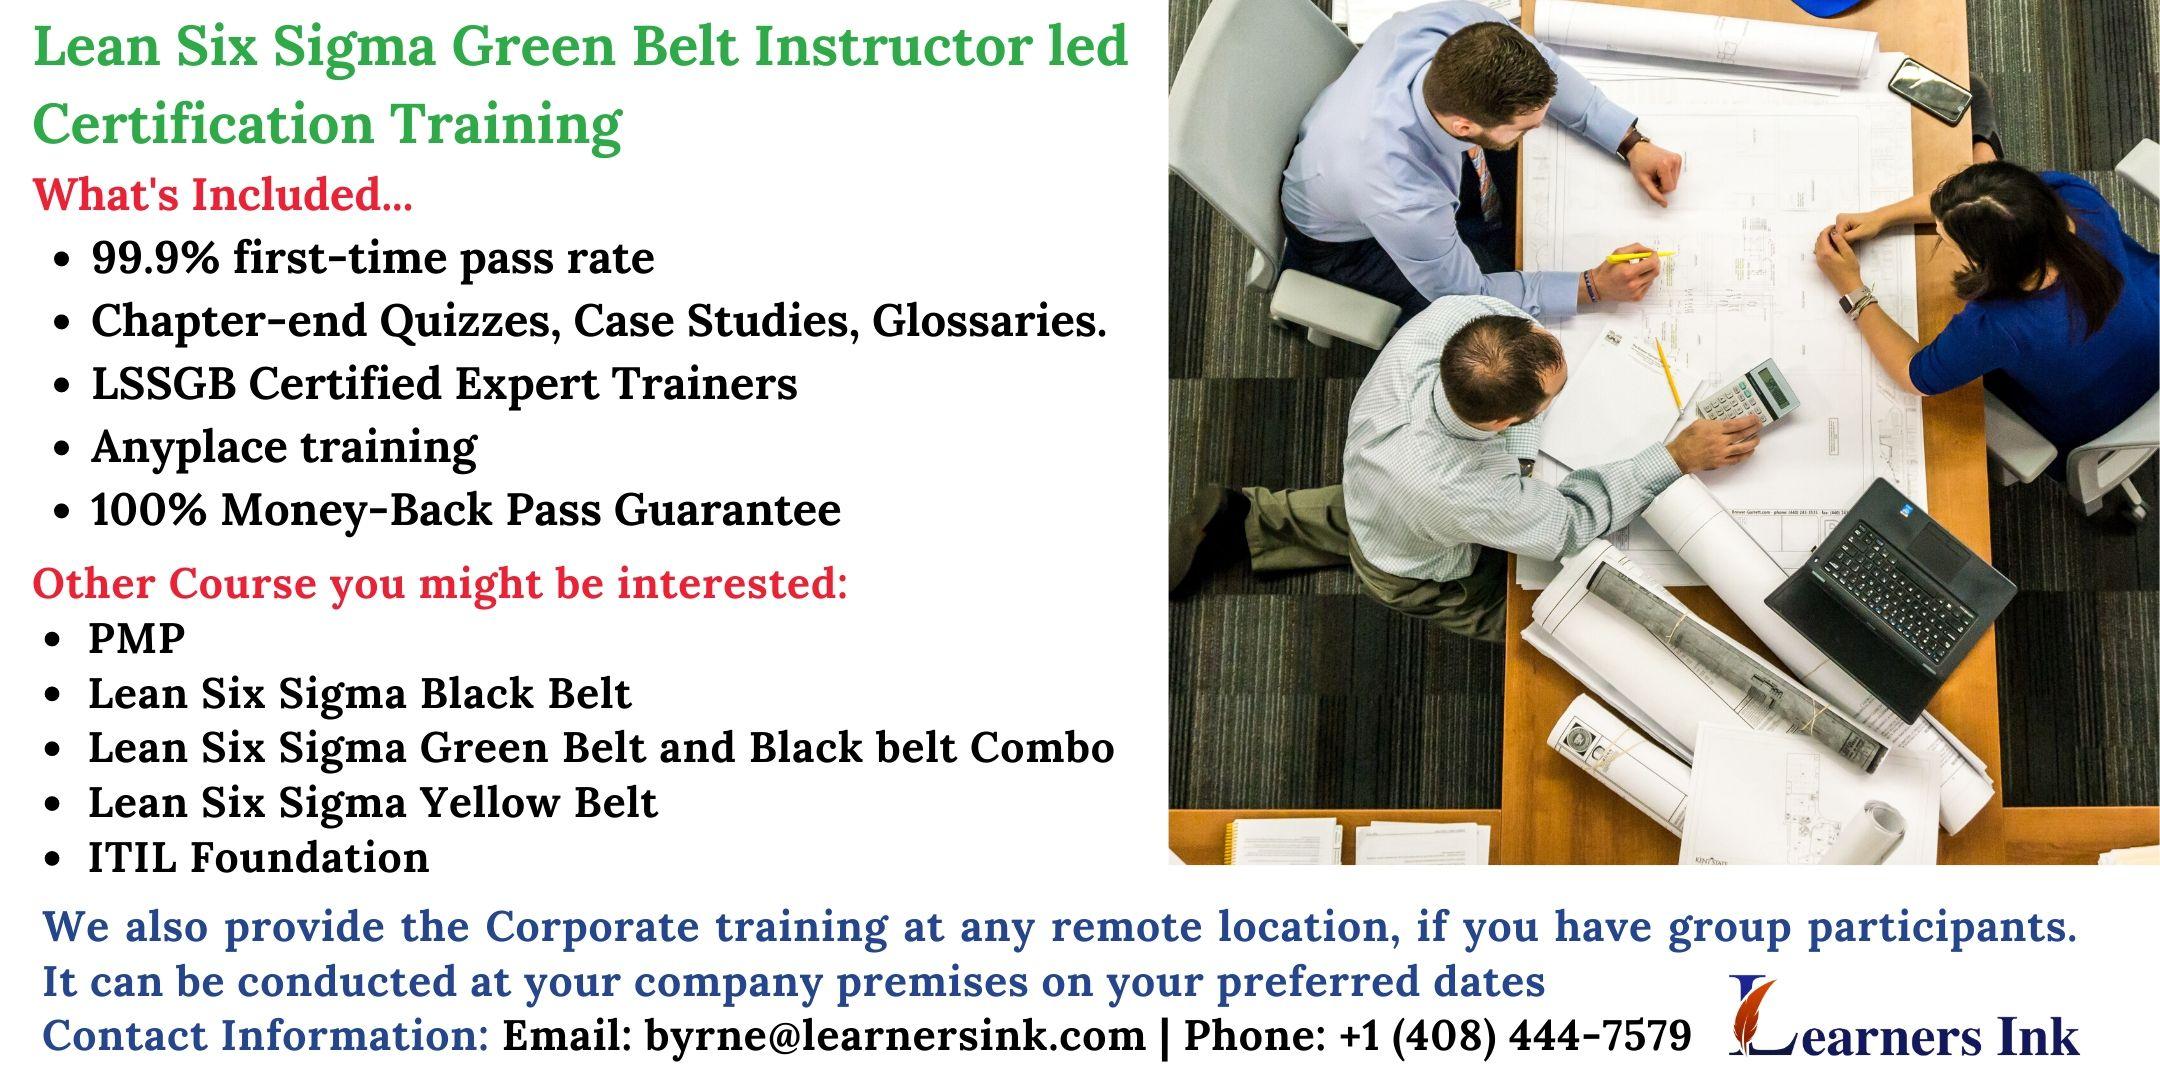 Lean Six Sigma Green Belt Certification Training Course (LSSGB) in Waterbury